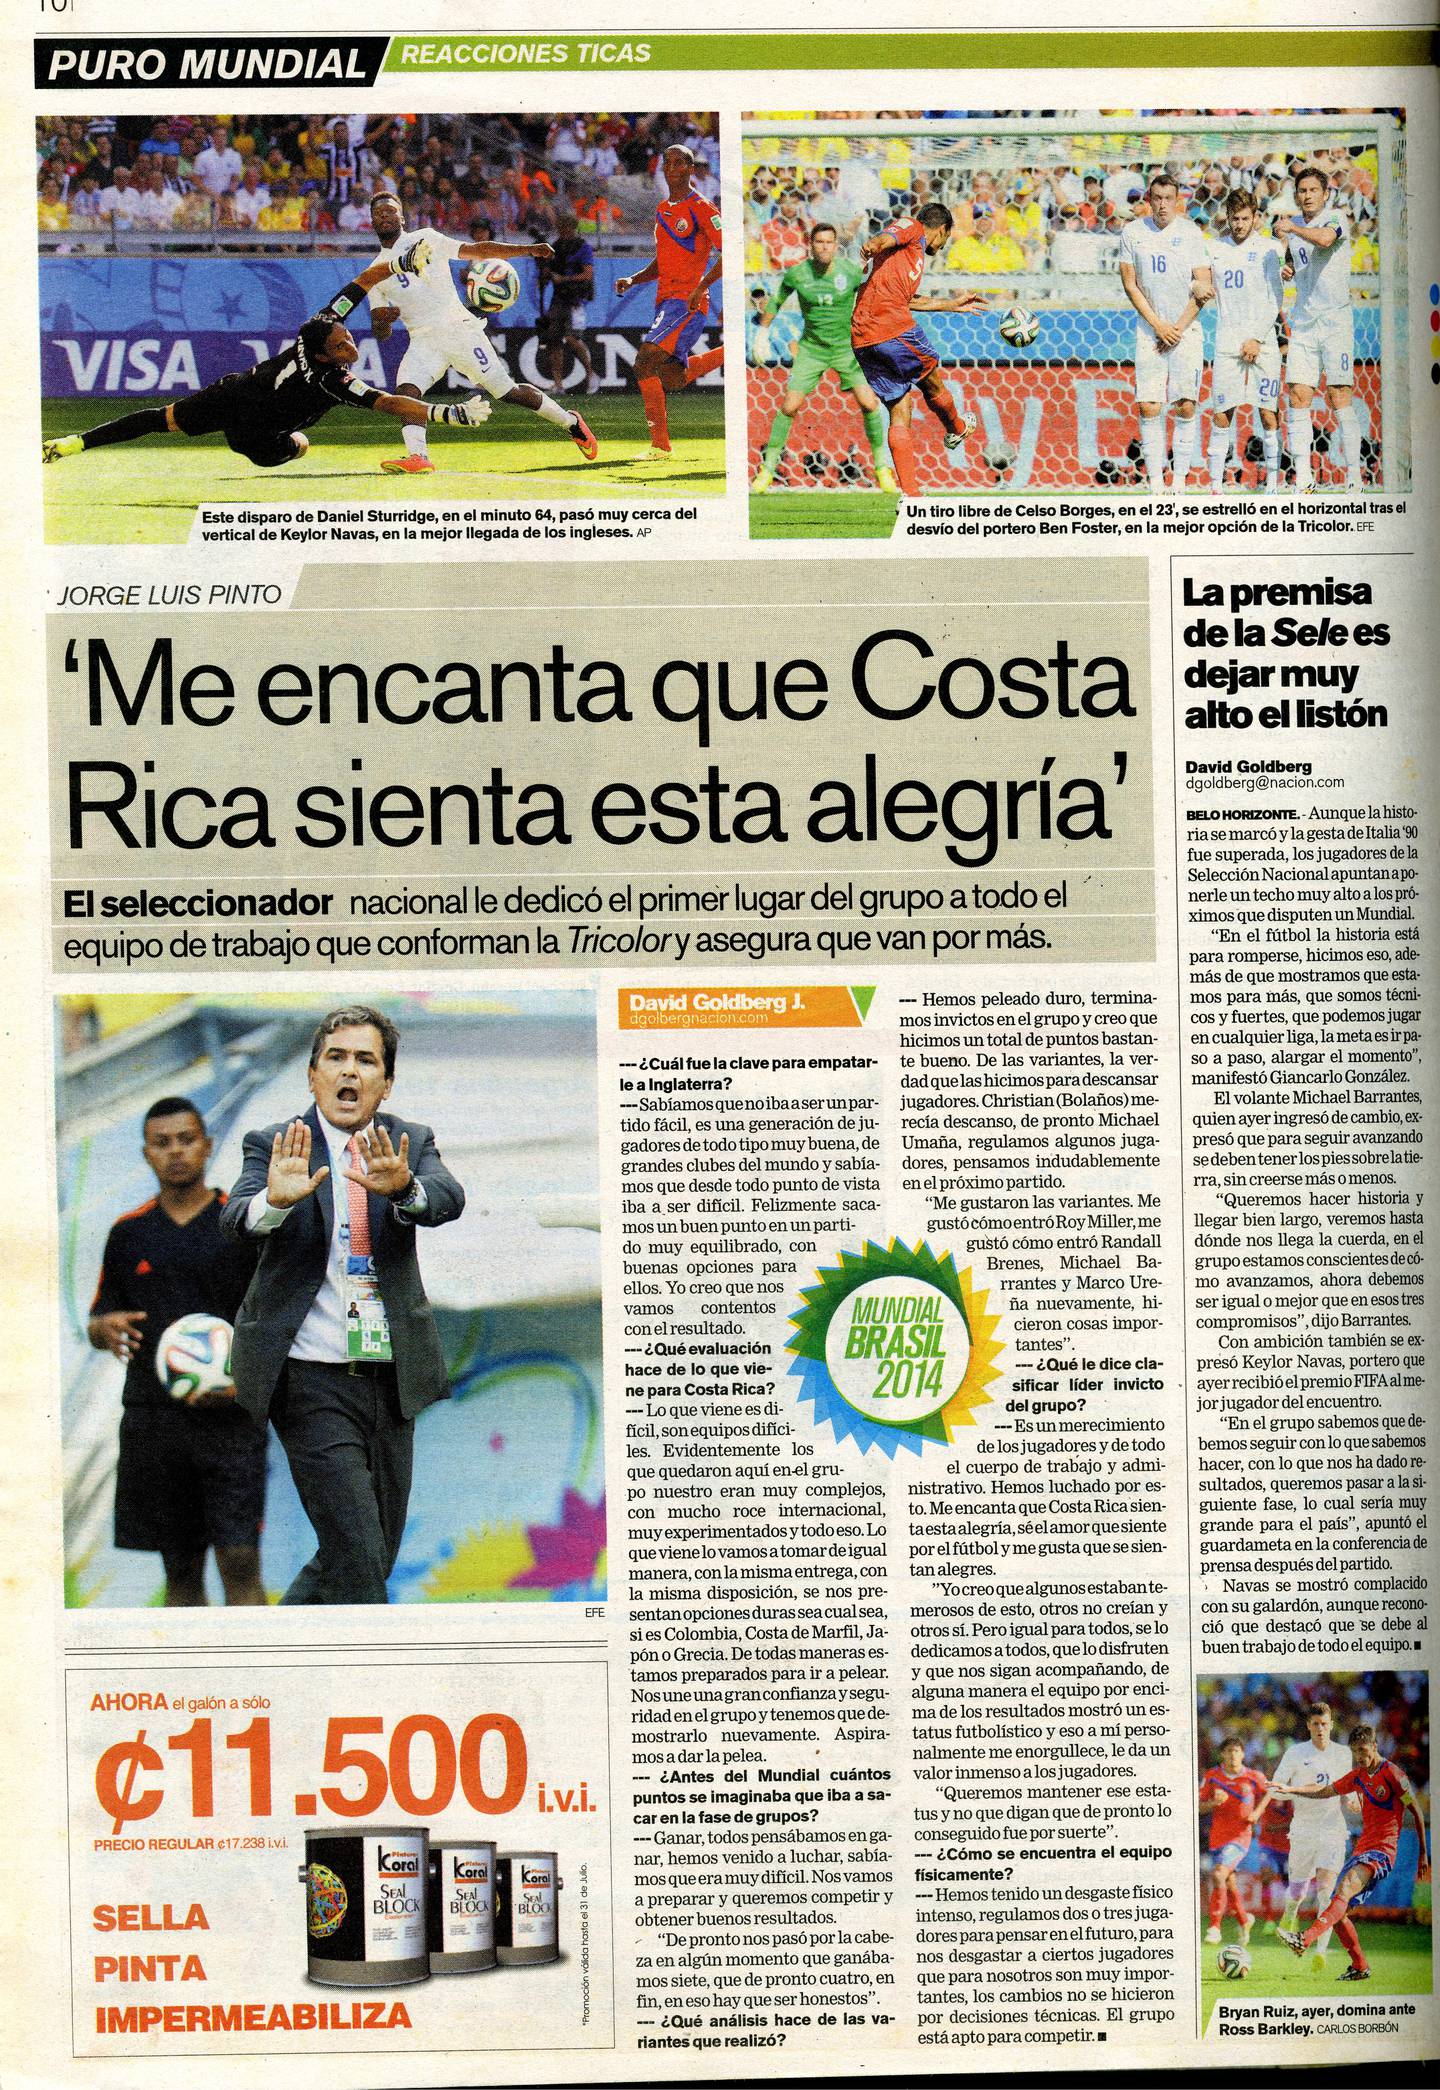 Mundial 2014 La Nación, Partido Costa Rica vs. Inglaterra en Brasil 2014.